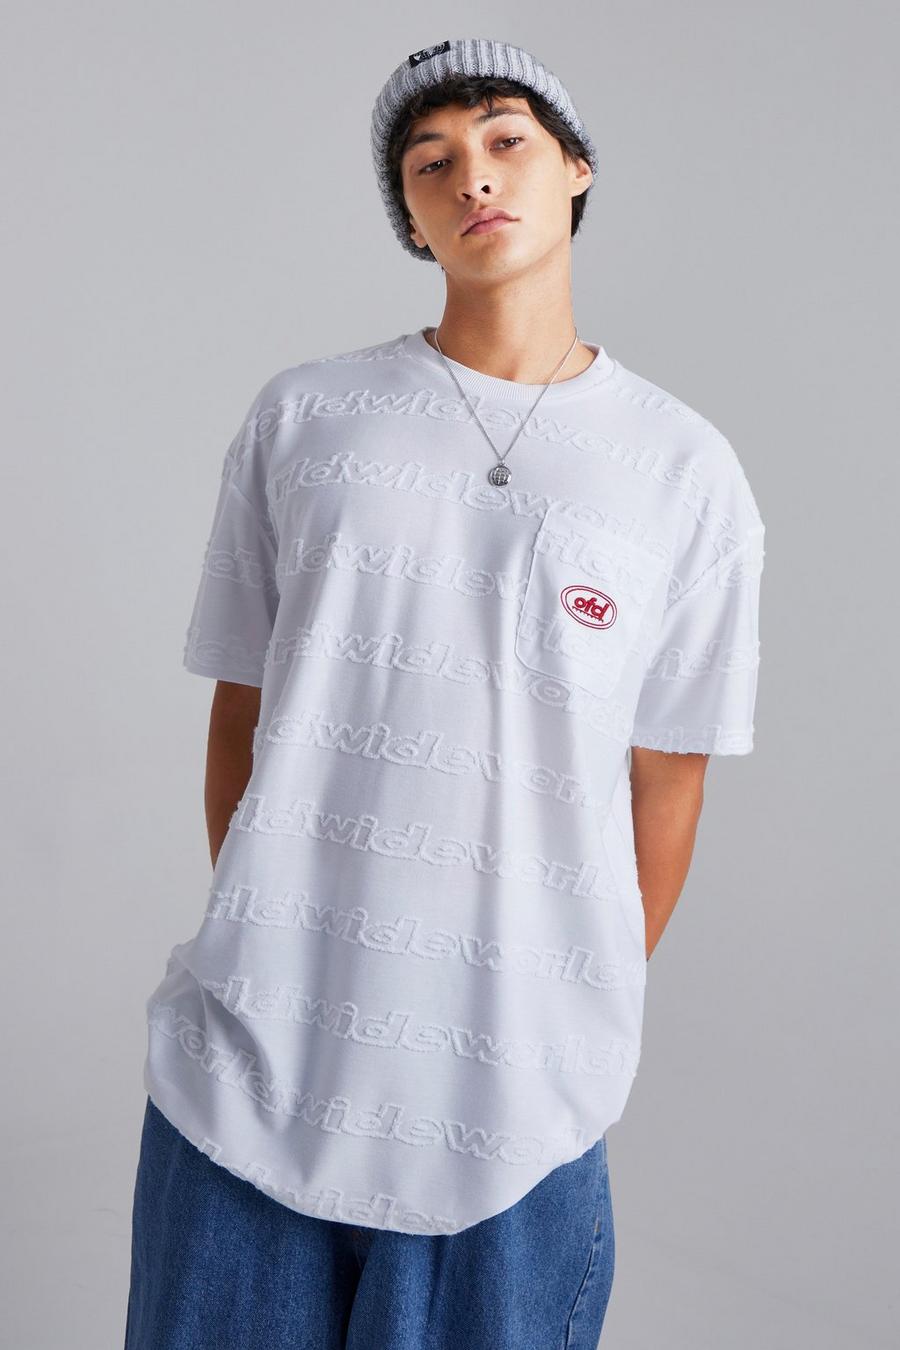 Camiseta oversize de felpa con estampado Worldwide, White